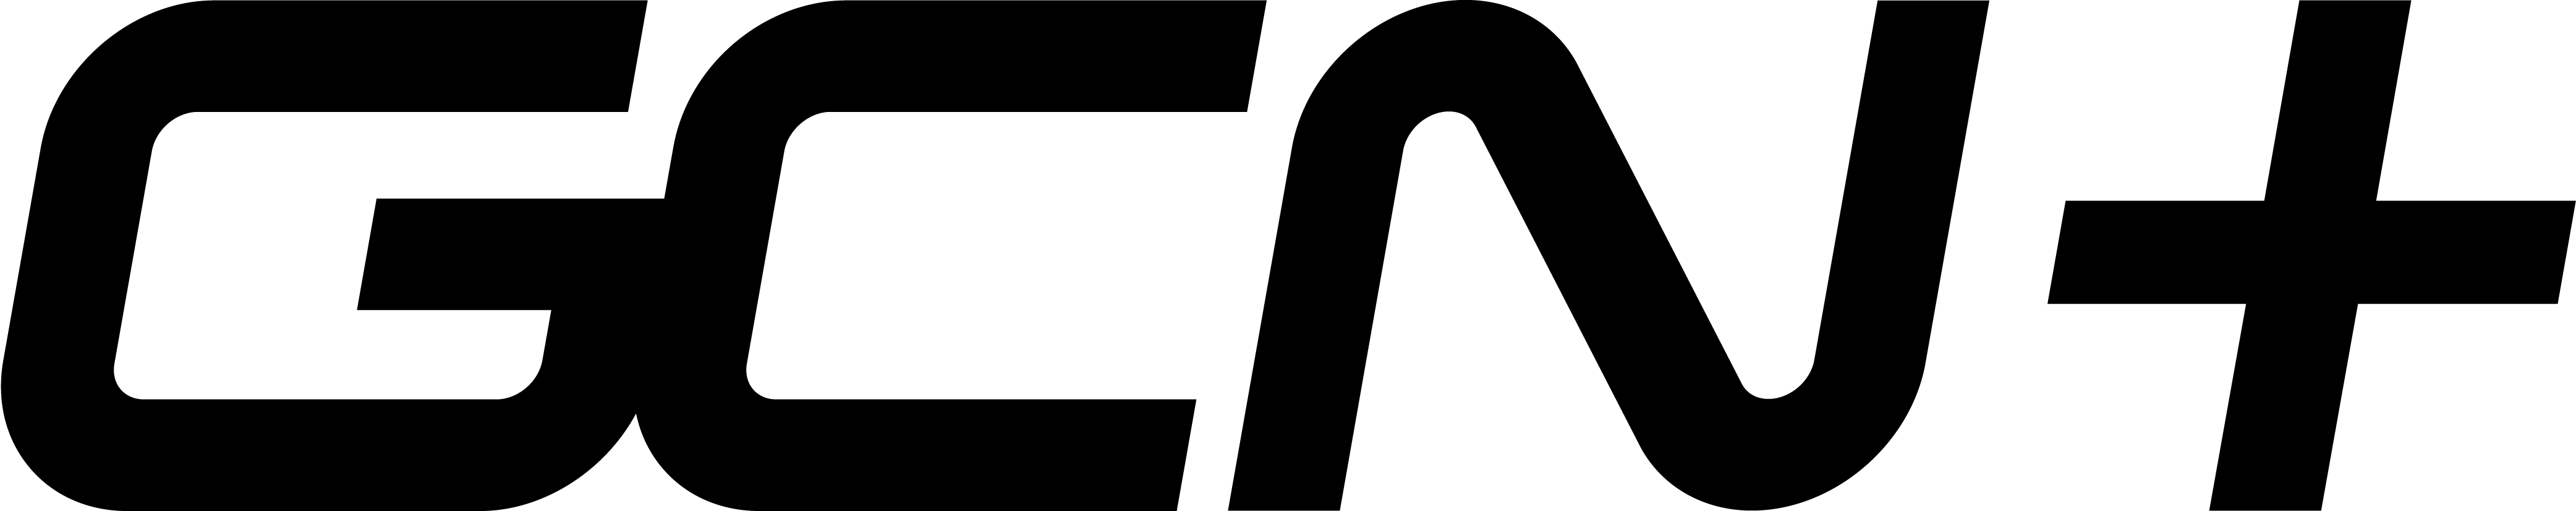 Global Cycling Network Logo